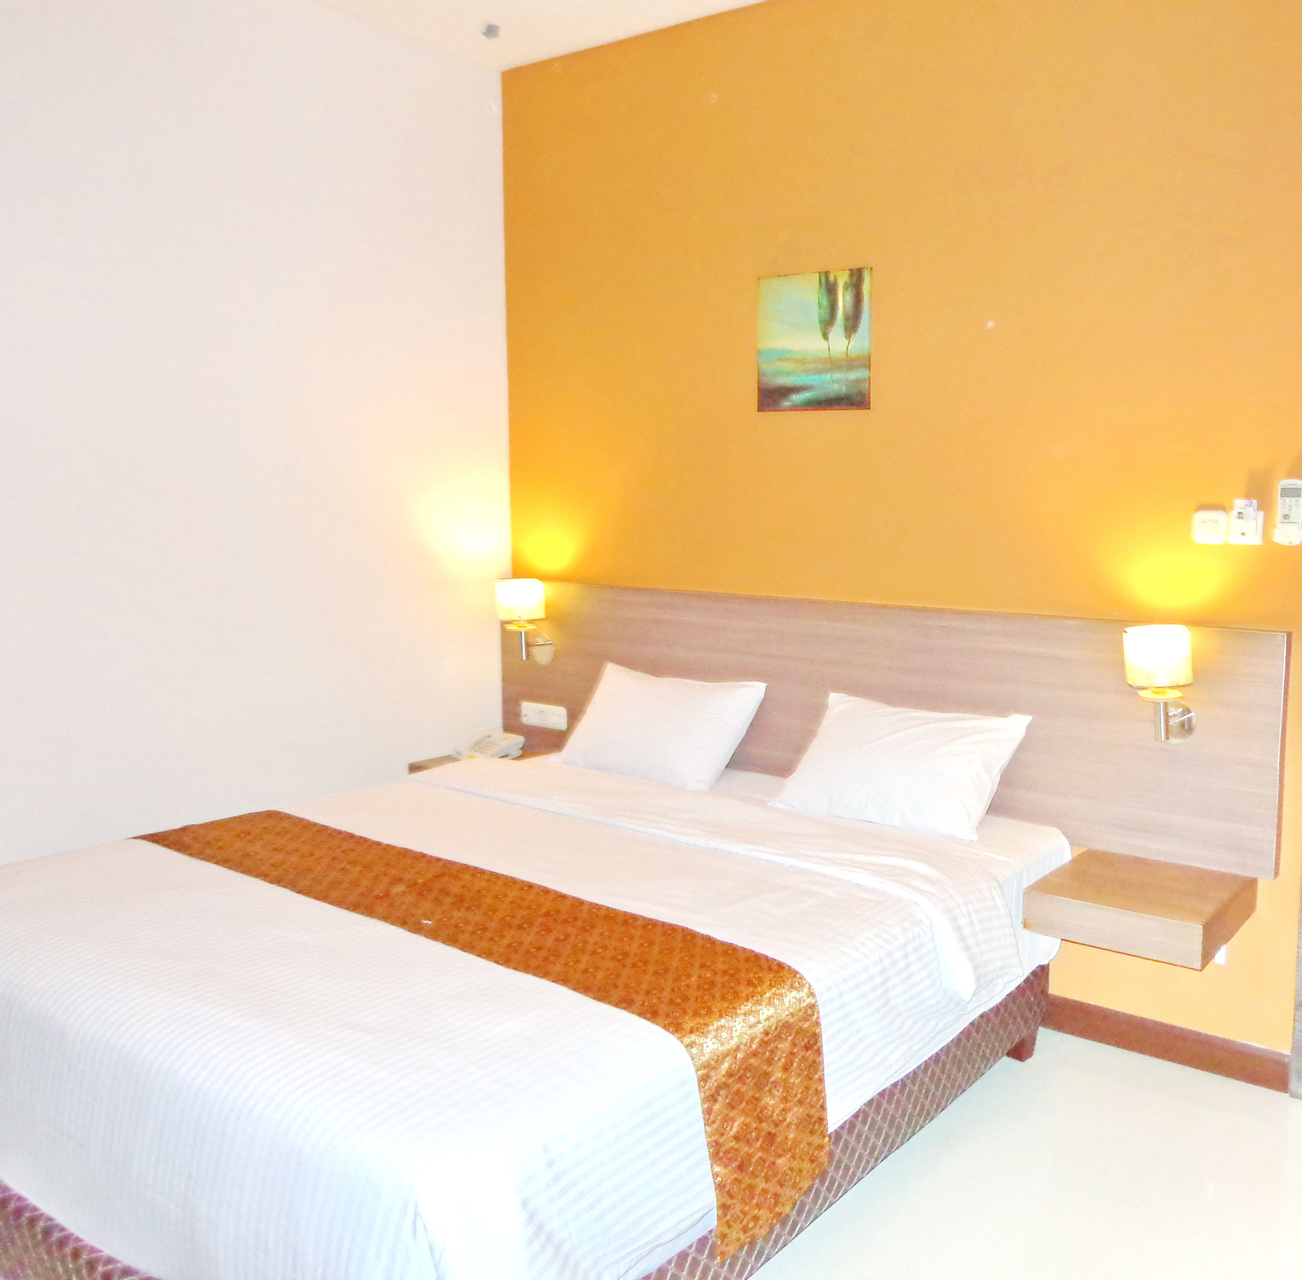 Bedroom 2, Franks Hotel, Surabaya